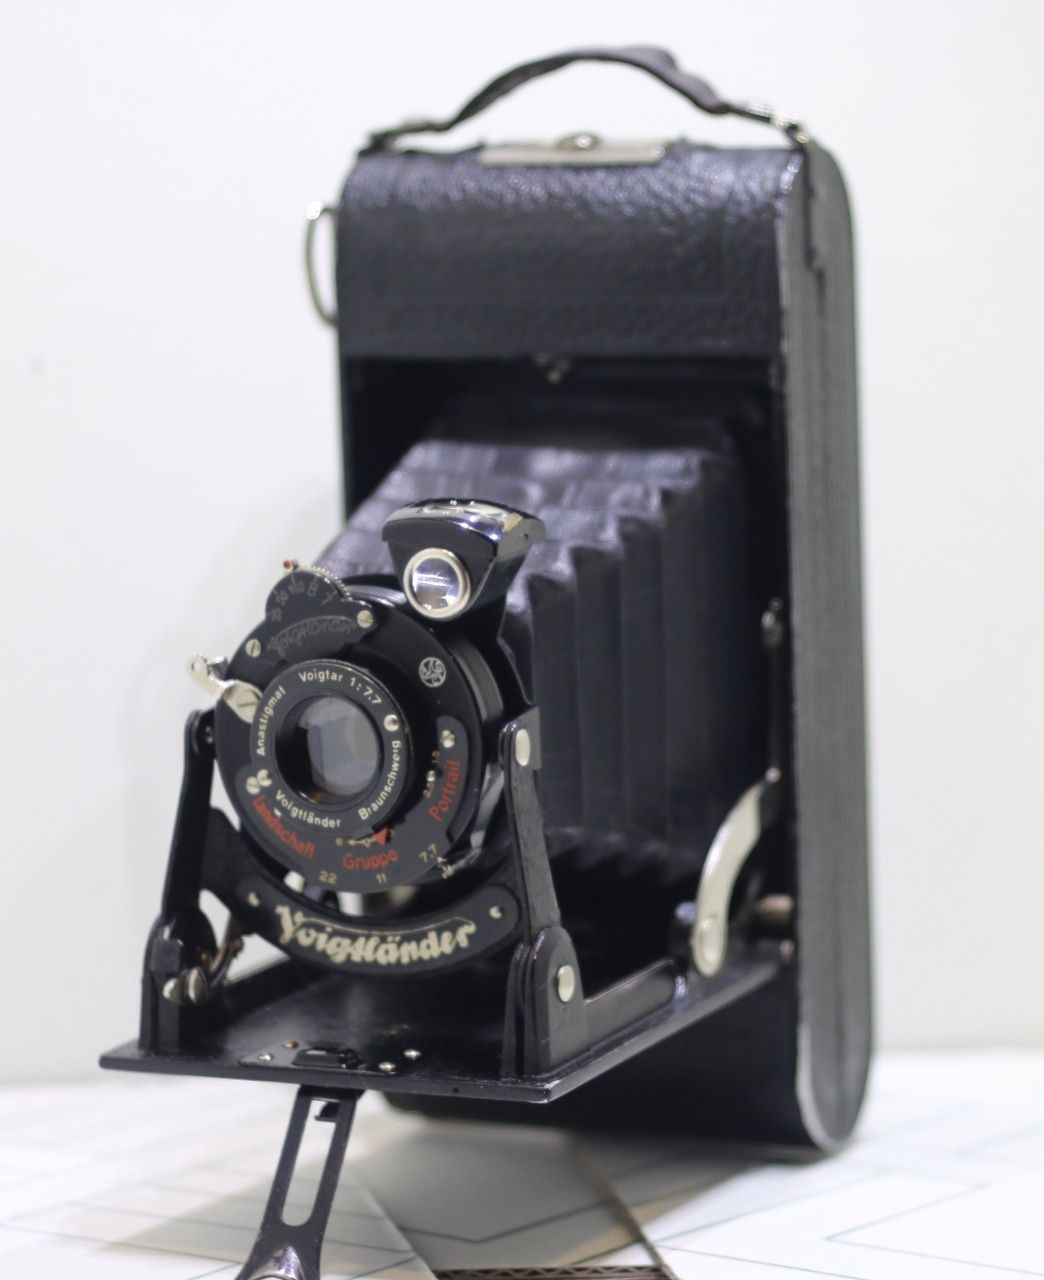 PARTS ONLY !! Vintage Voigtlander Folding Camera Anastigmat Voigtar Lens